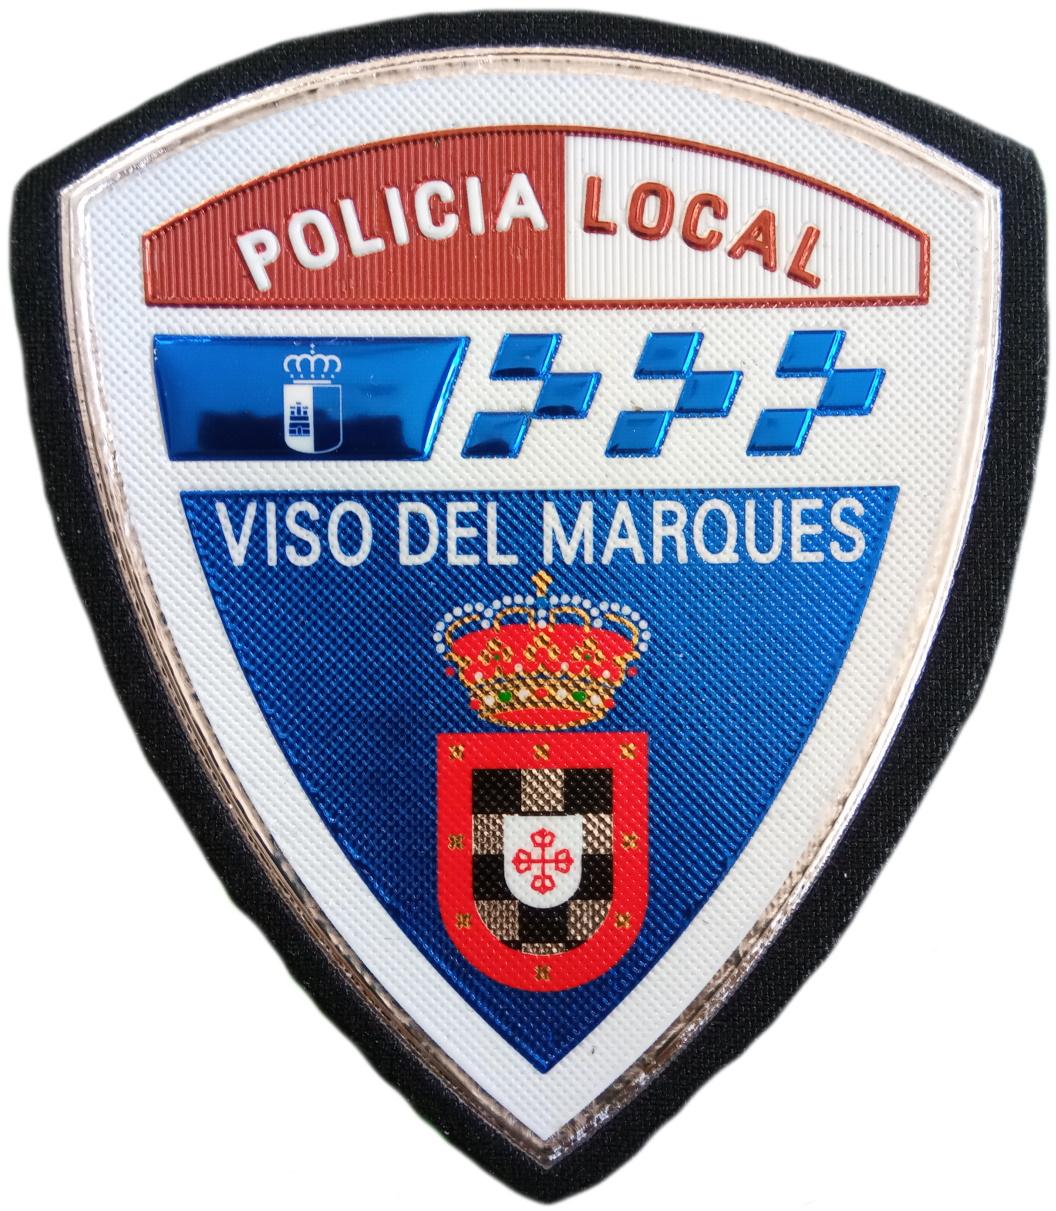 Policía Local Viso del Marques parche insignia emblema distintivo